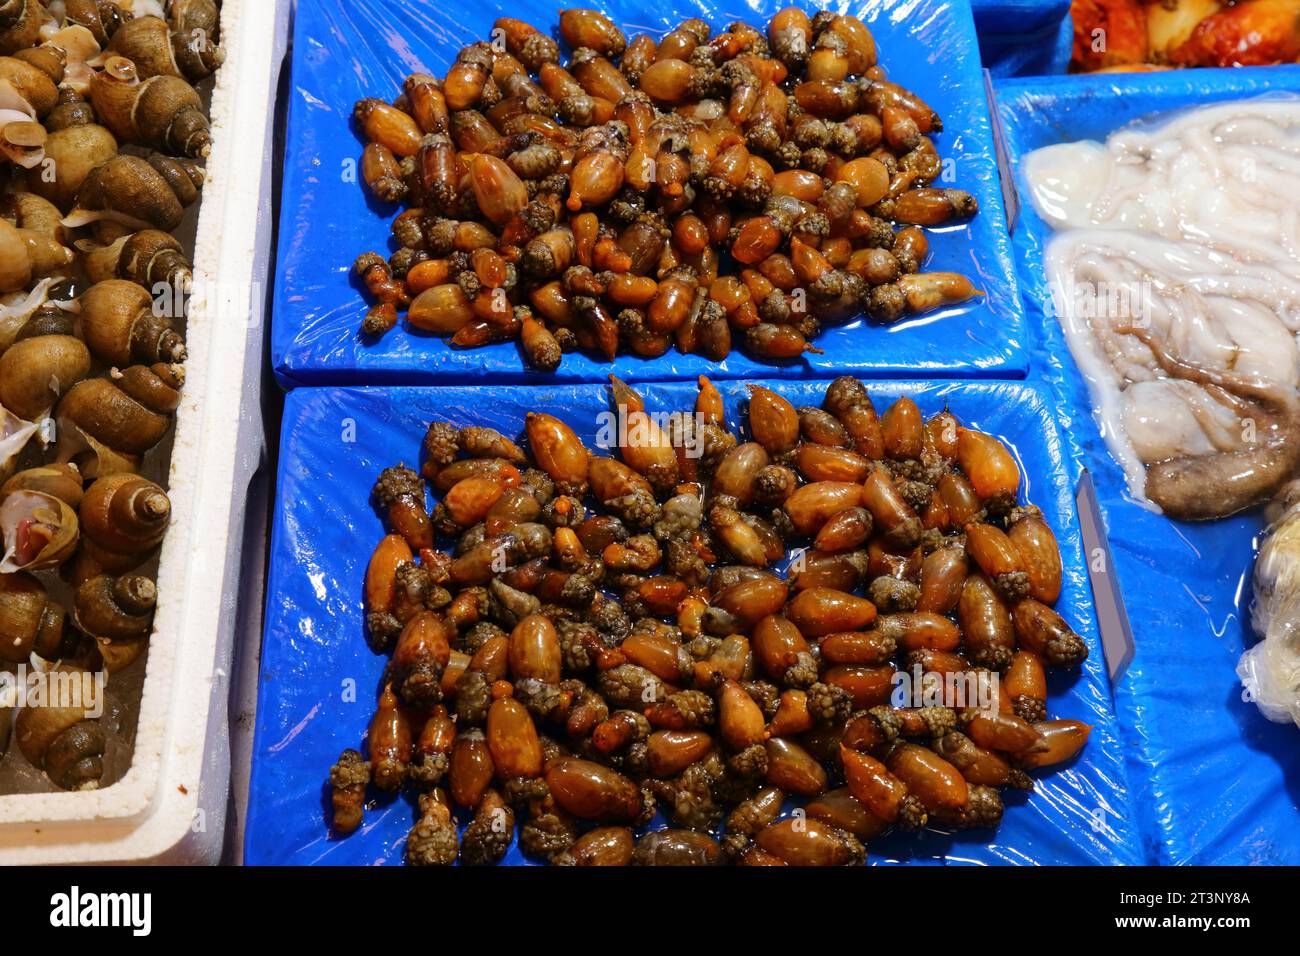 Fish market in Seoul, South Korea. Stalked sea squirts (Styela clava) - shellfish at Noryangjin Fish Market. Stock Photo